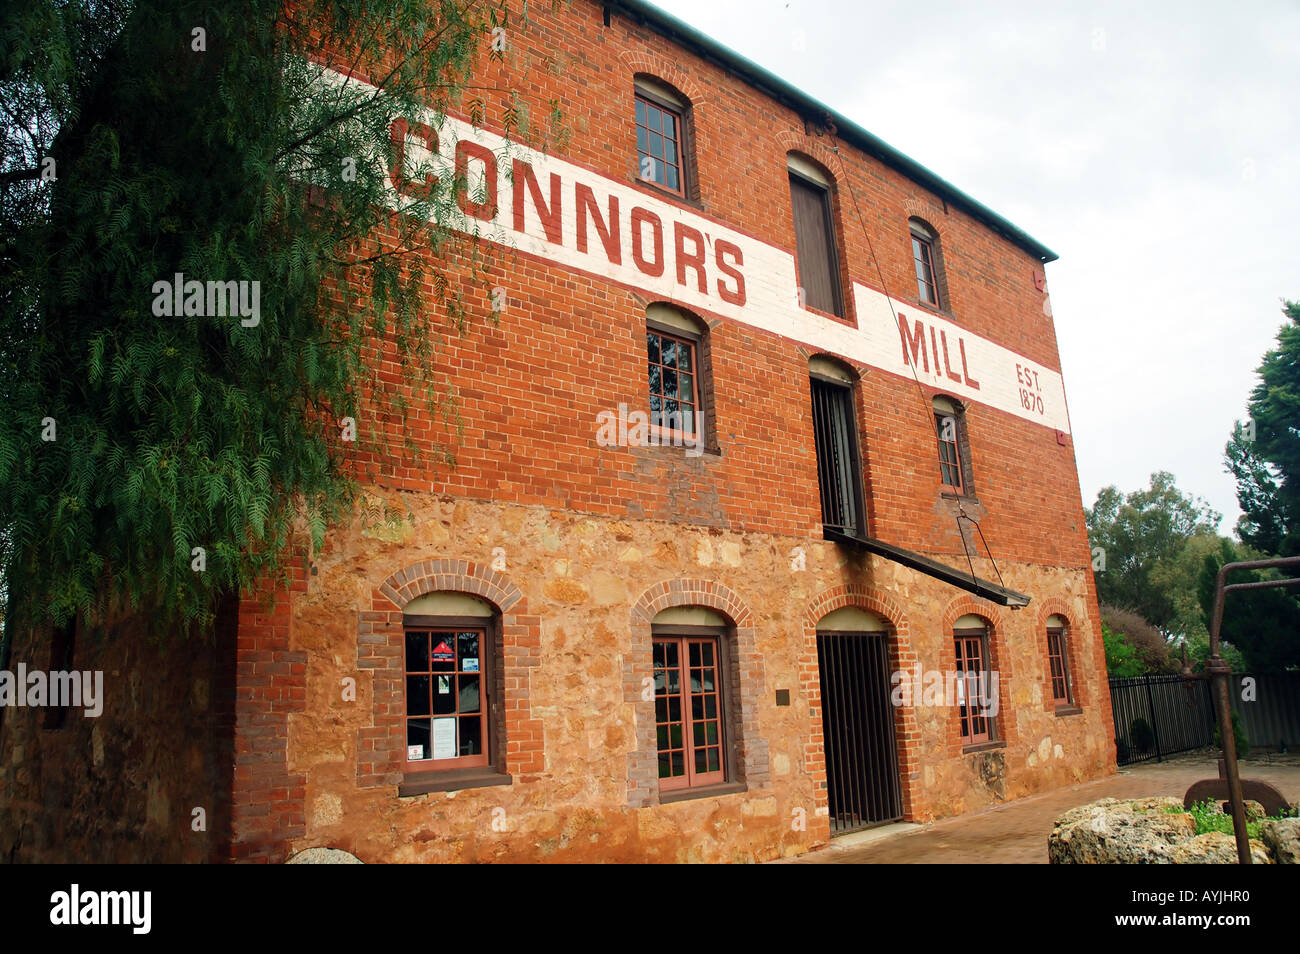 Connor's Mill , Toodyay, Western Australia Stock Photo